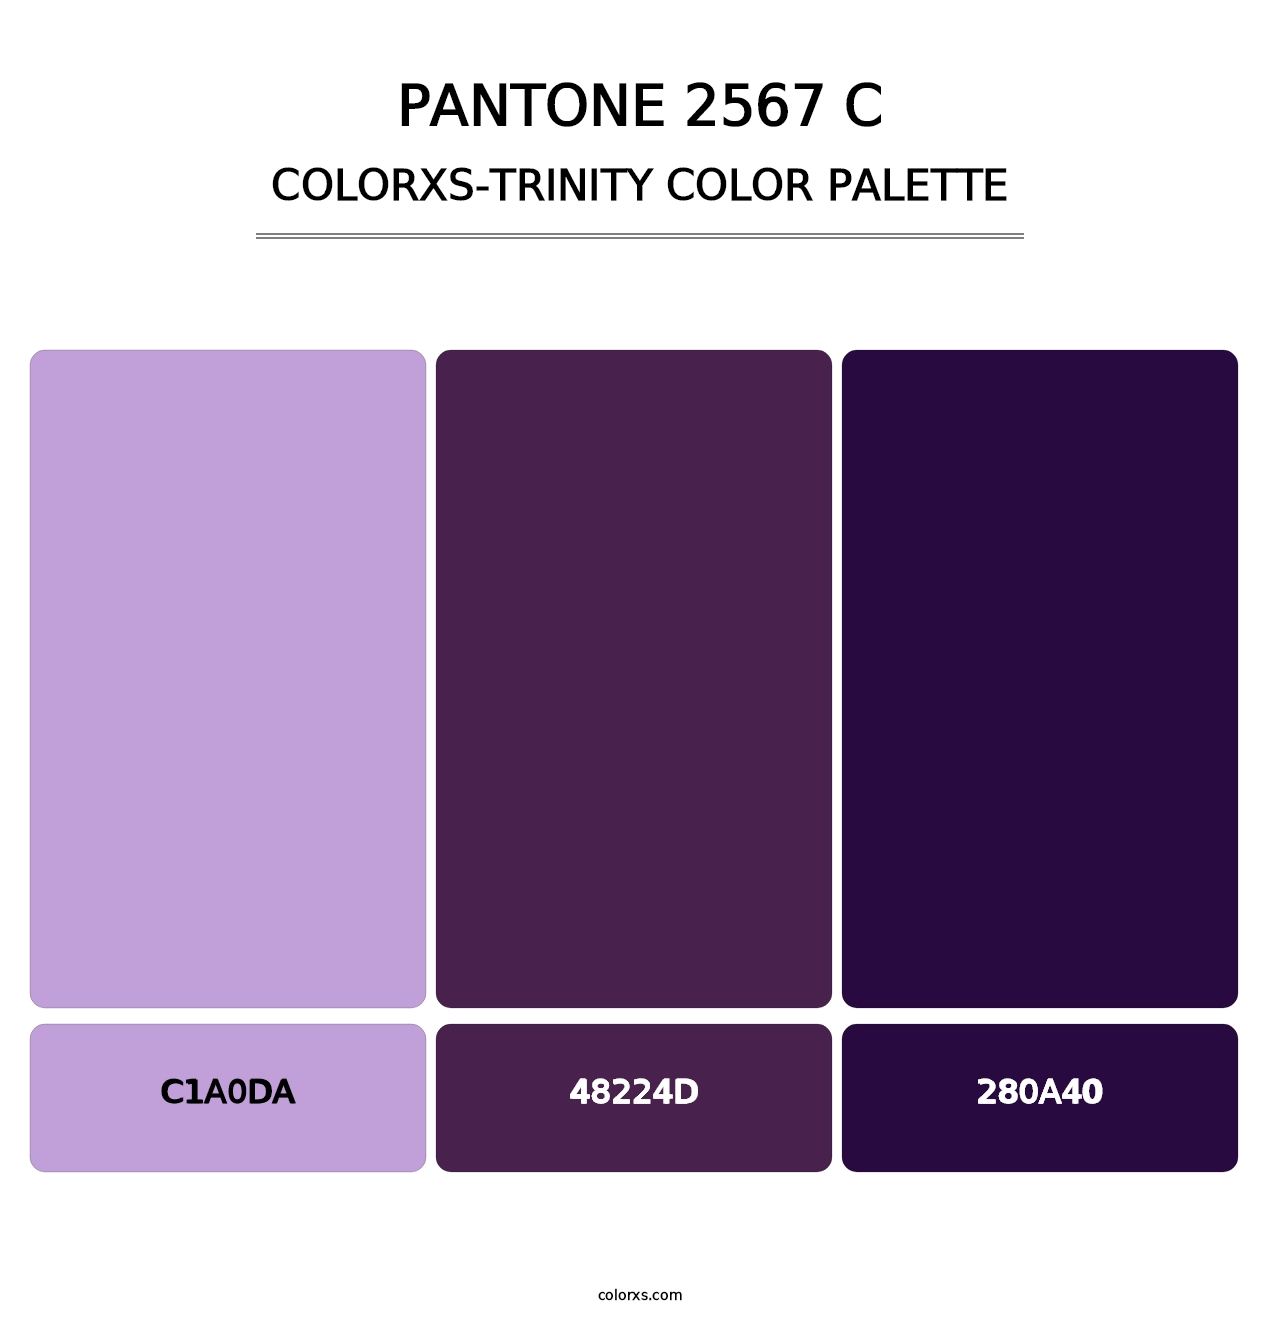 PANTONE 2567 C - Colorxs Trinity Palette